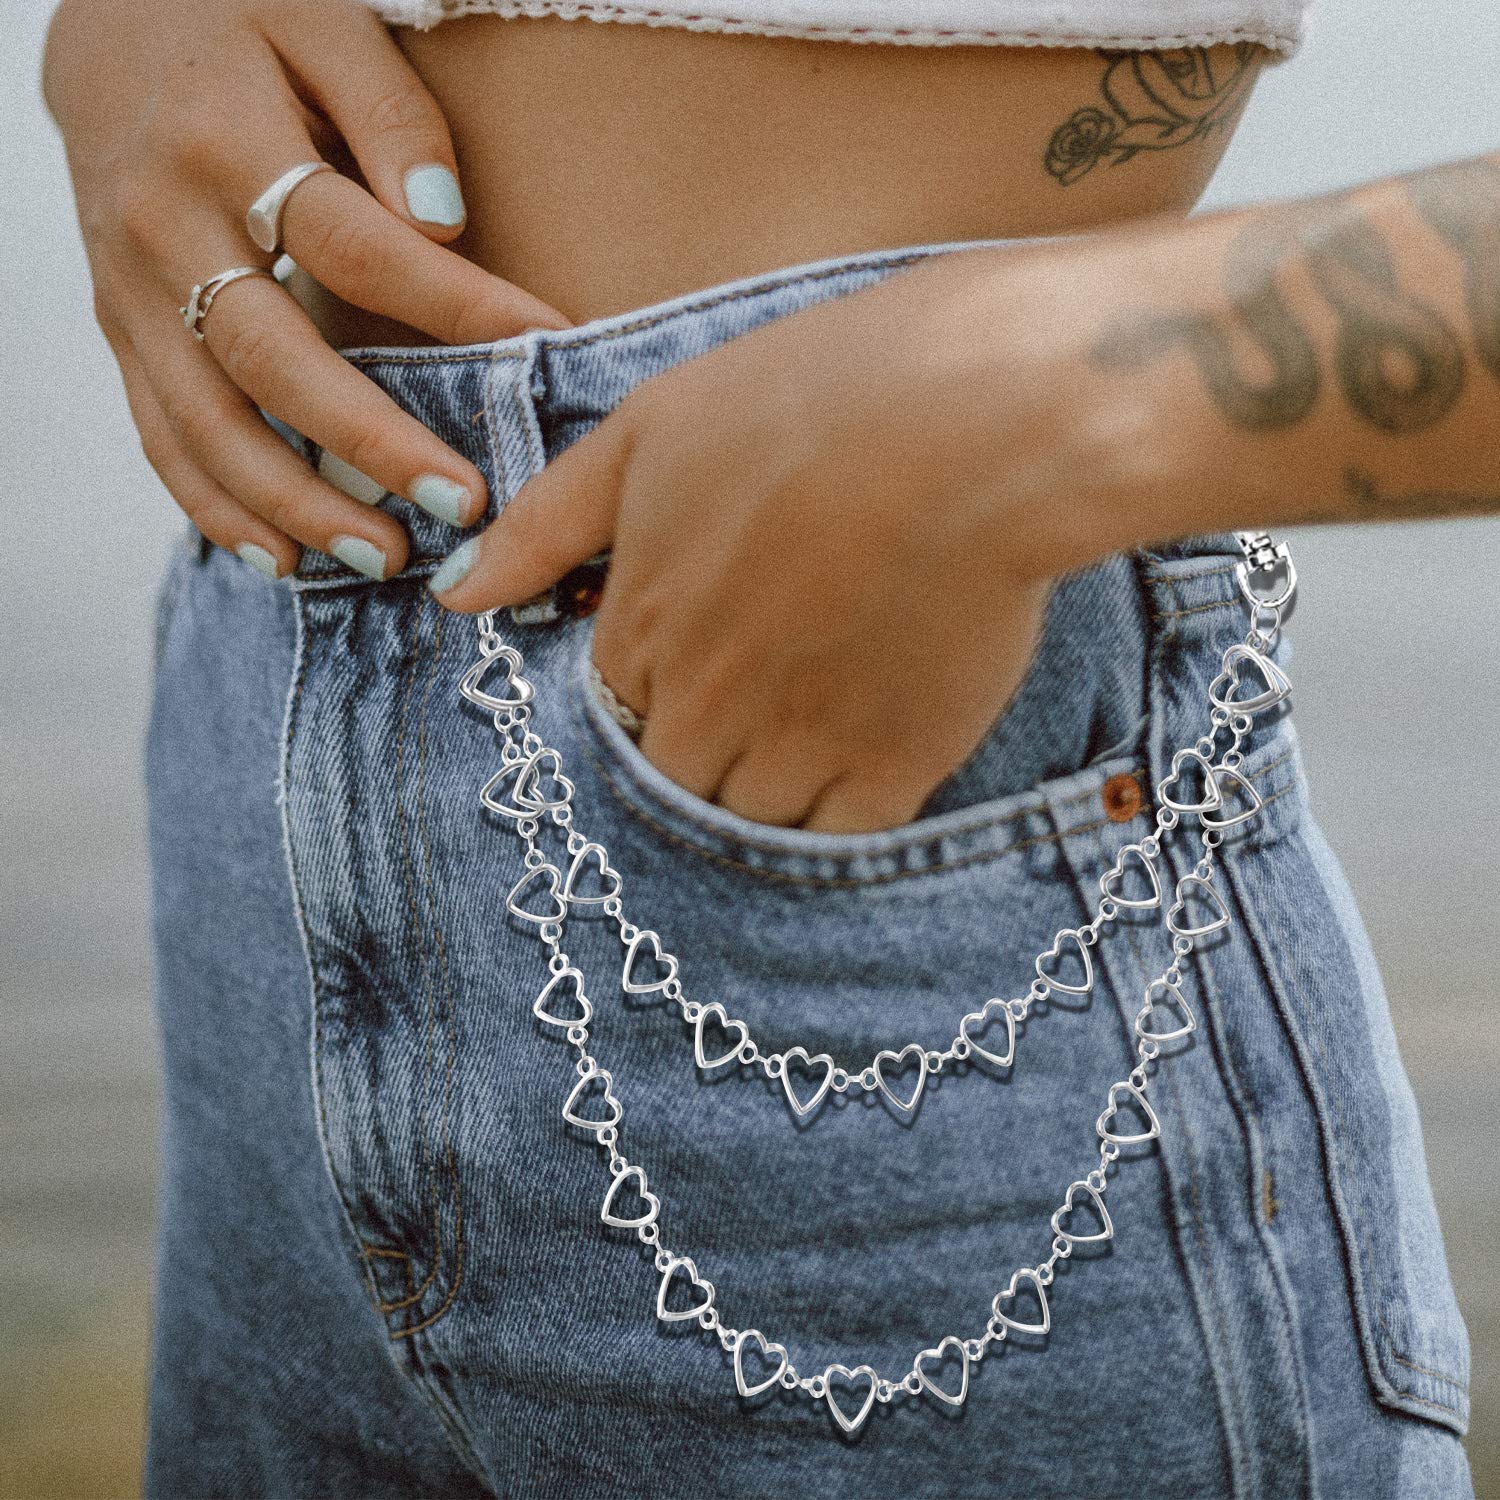 Lainrrew Pants Chain, Wallet Chain Belt Chain Pocket Chain Trousers Chain Hip Hop Punk Chains Goth Jeans Chain Keychains Body Jewelry Goth Accessories for Eboy Egirl Women Men (Style 2)